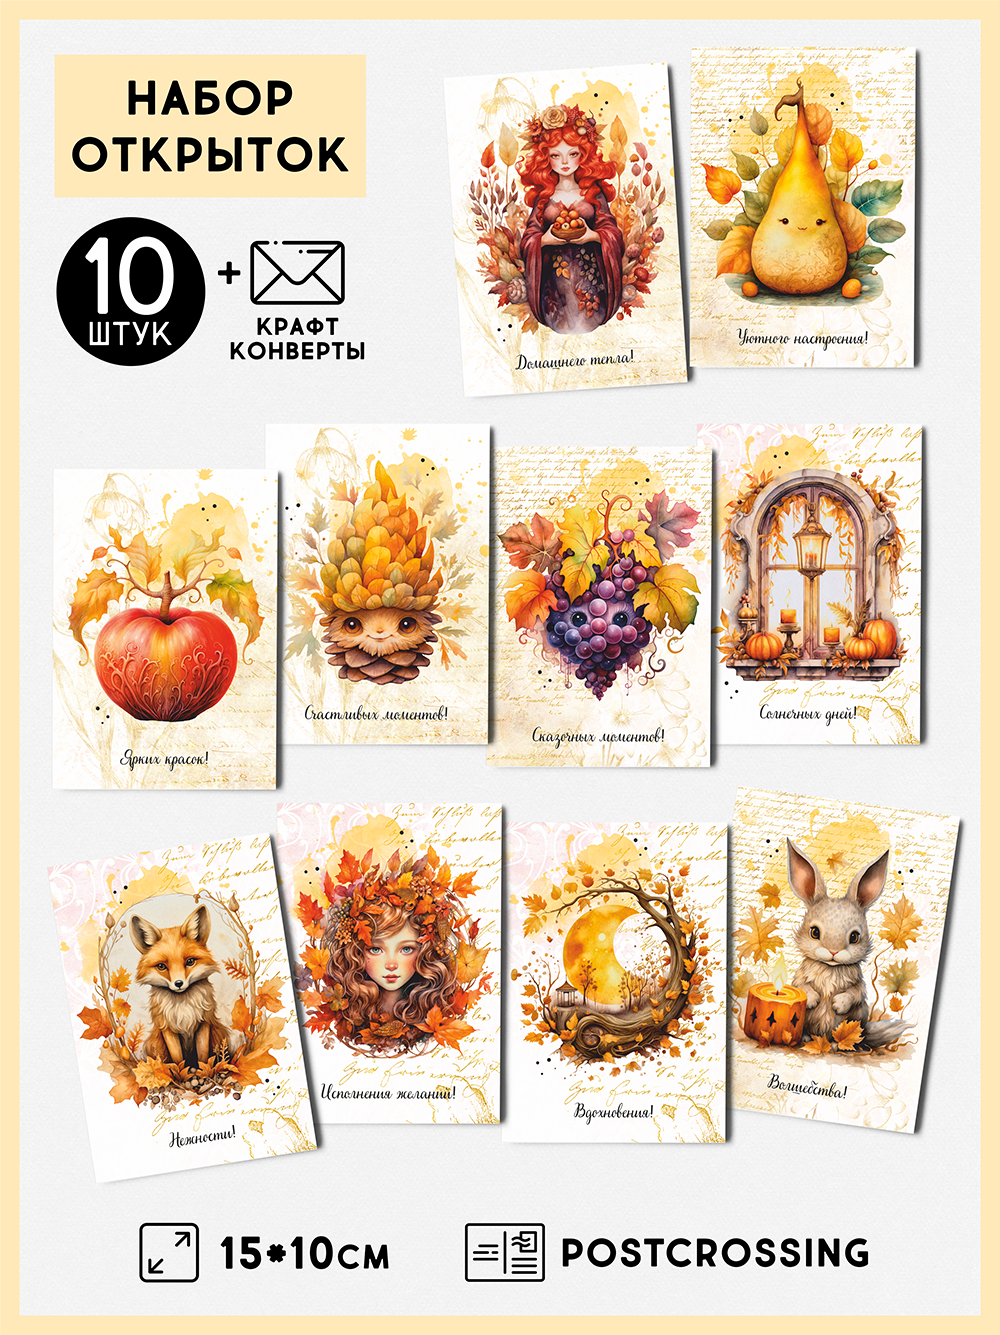 Набор открыток "Осень" с крафт конвертами, 10 штук, размер А6